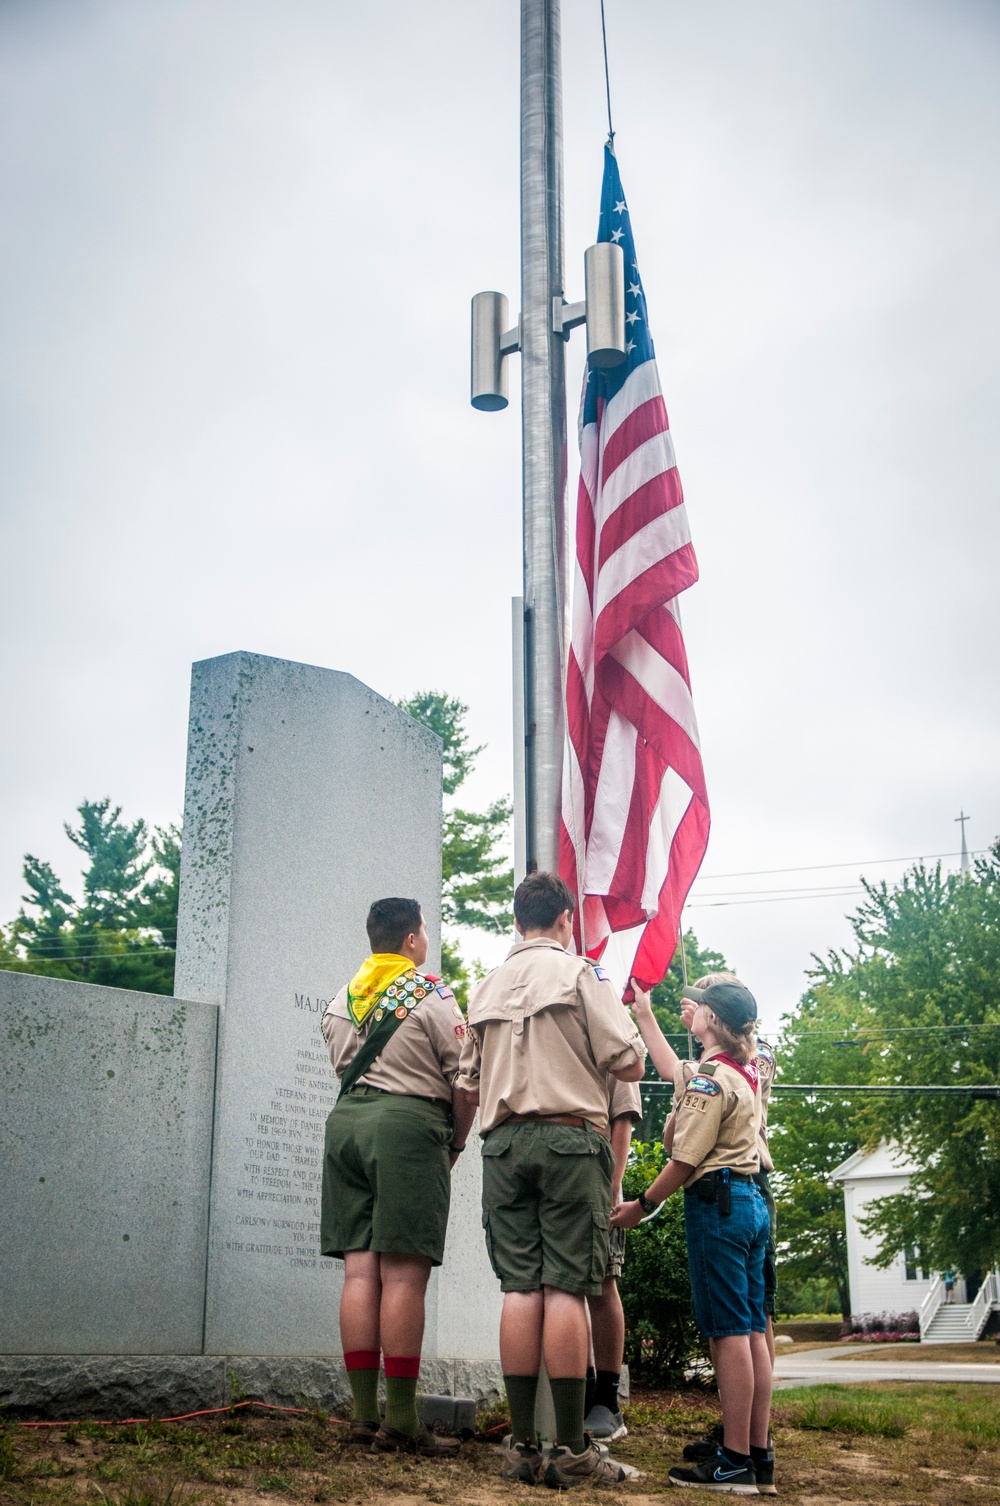 American Legion, Town Remember 9/11 on 15th Anniversary of Terror Attacks